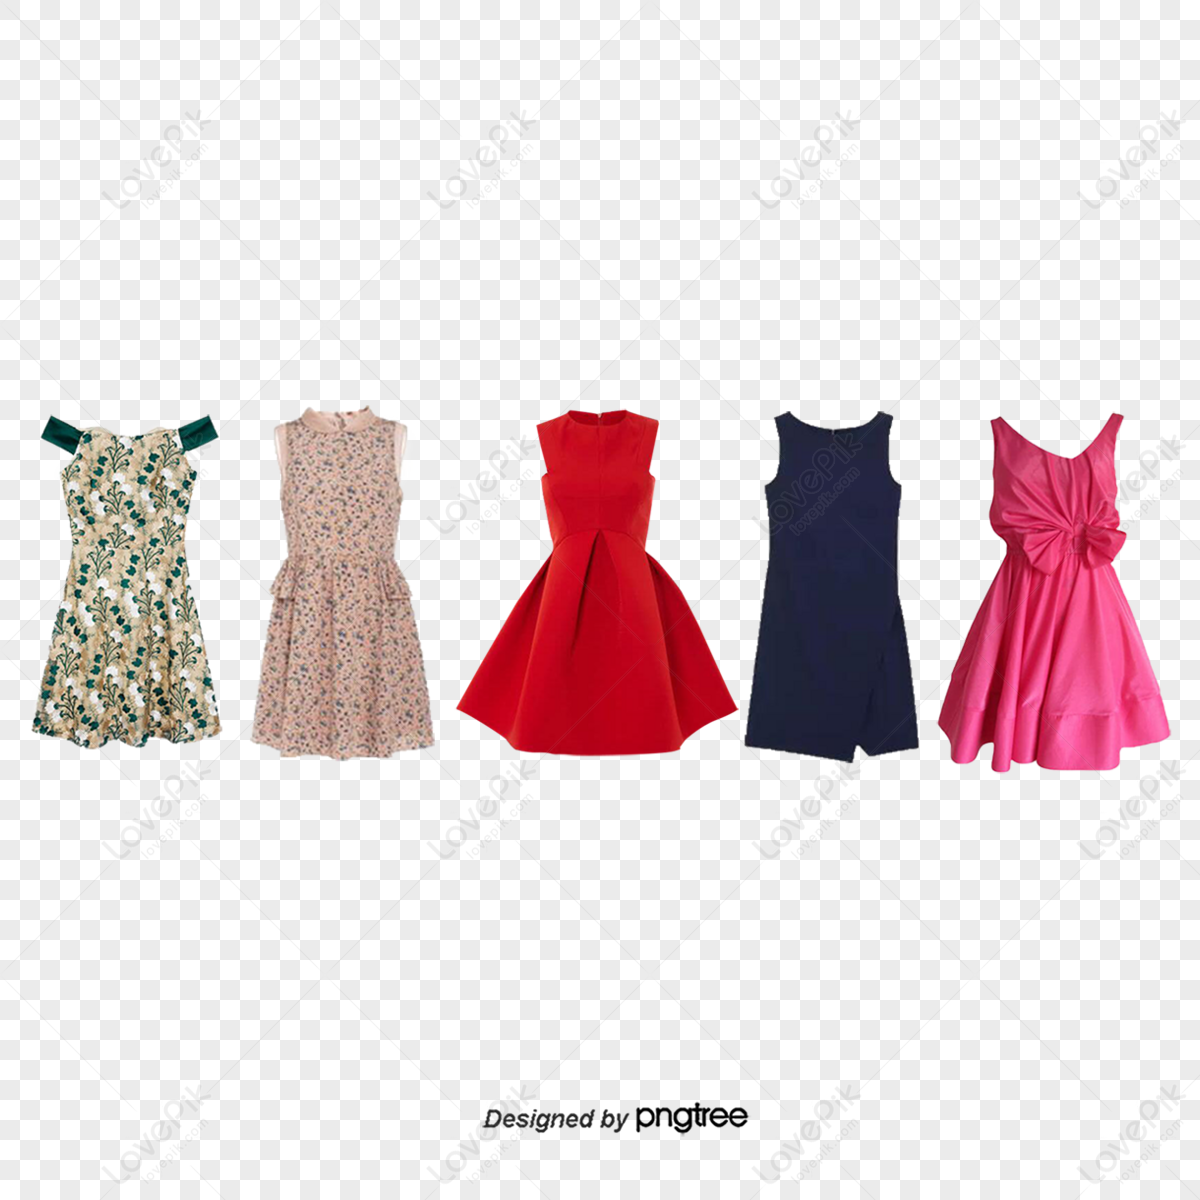 Clothes Set PNG Transparent Images Free Download, Vector Files